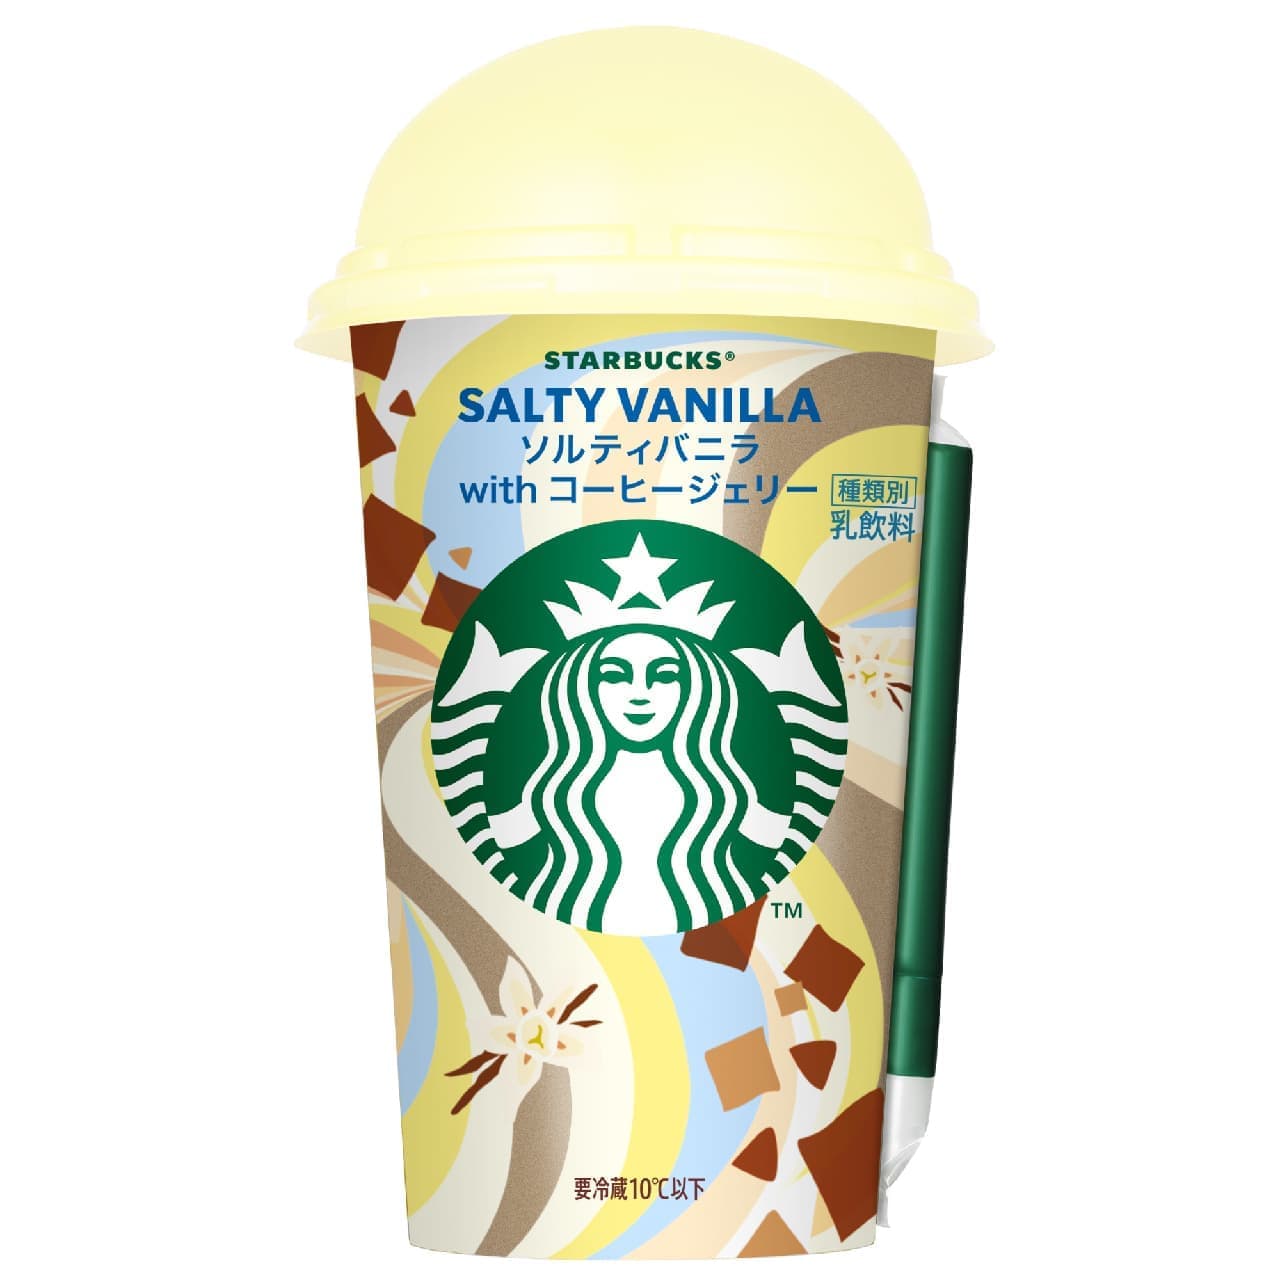 Starbucks Salty Vanilla with Coffee Jelly